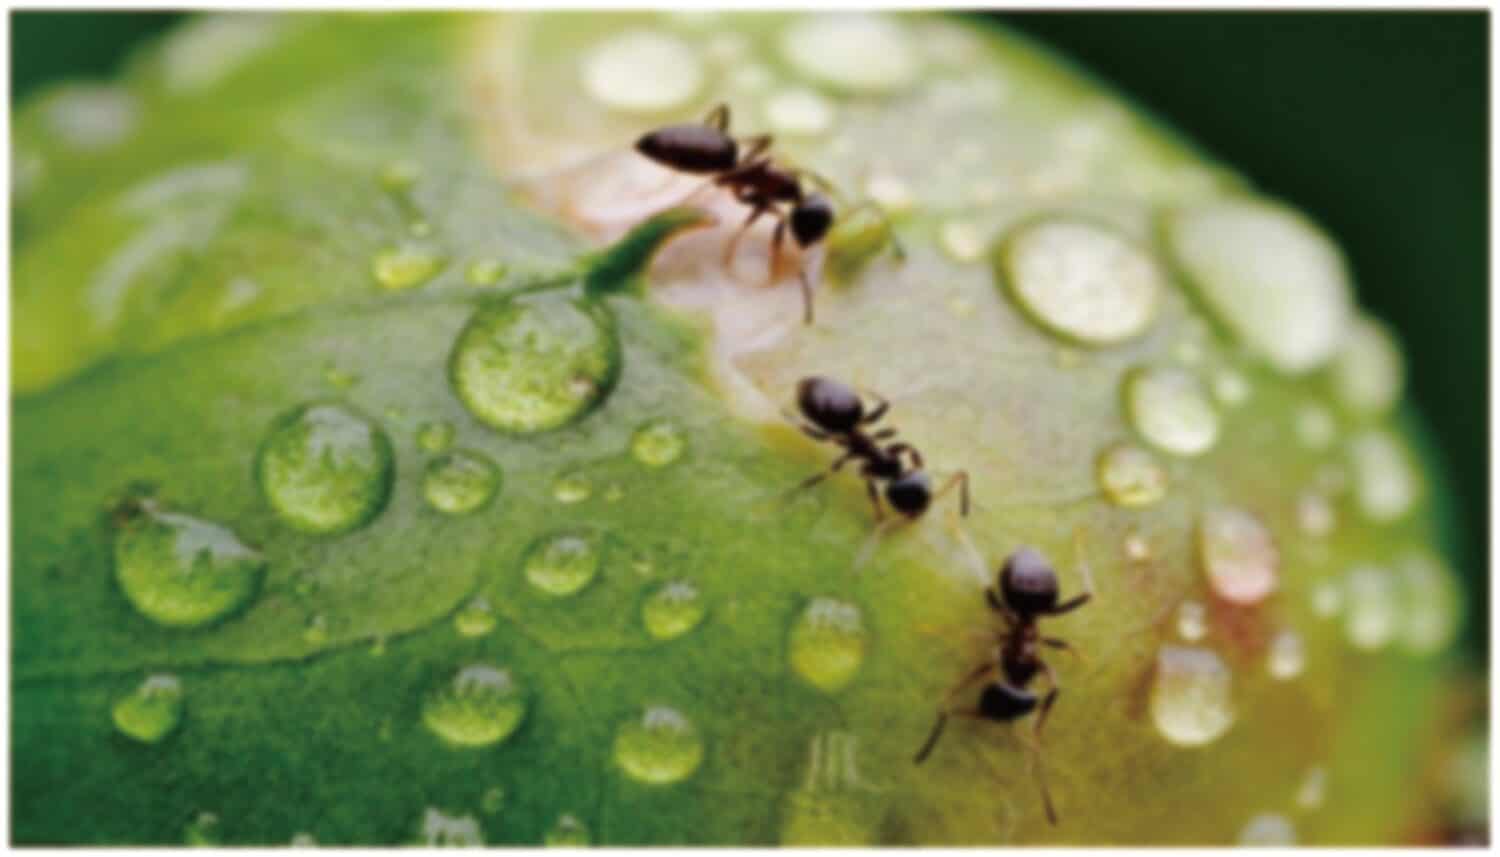 defocused abstract background of ants on leaves after rain at bojong danas